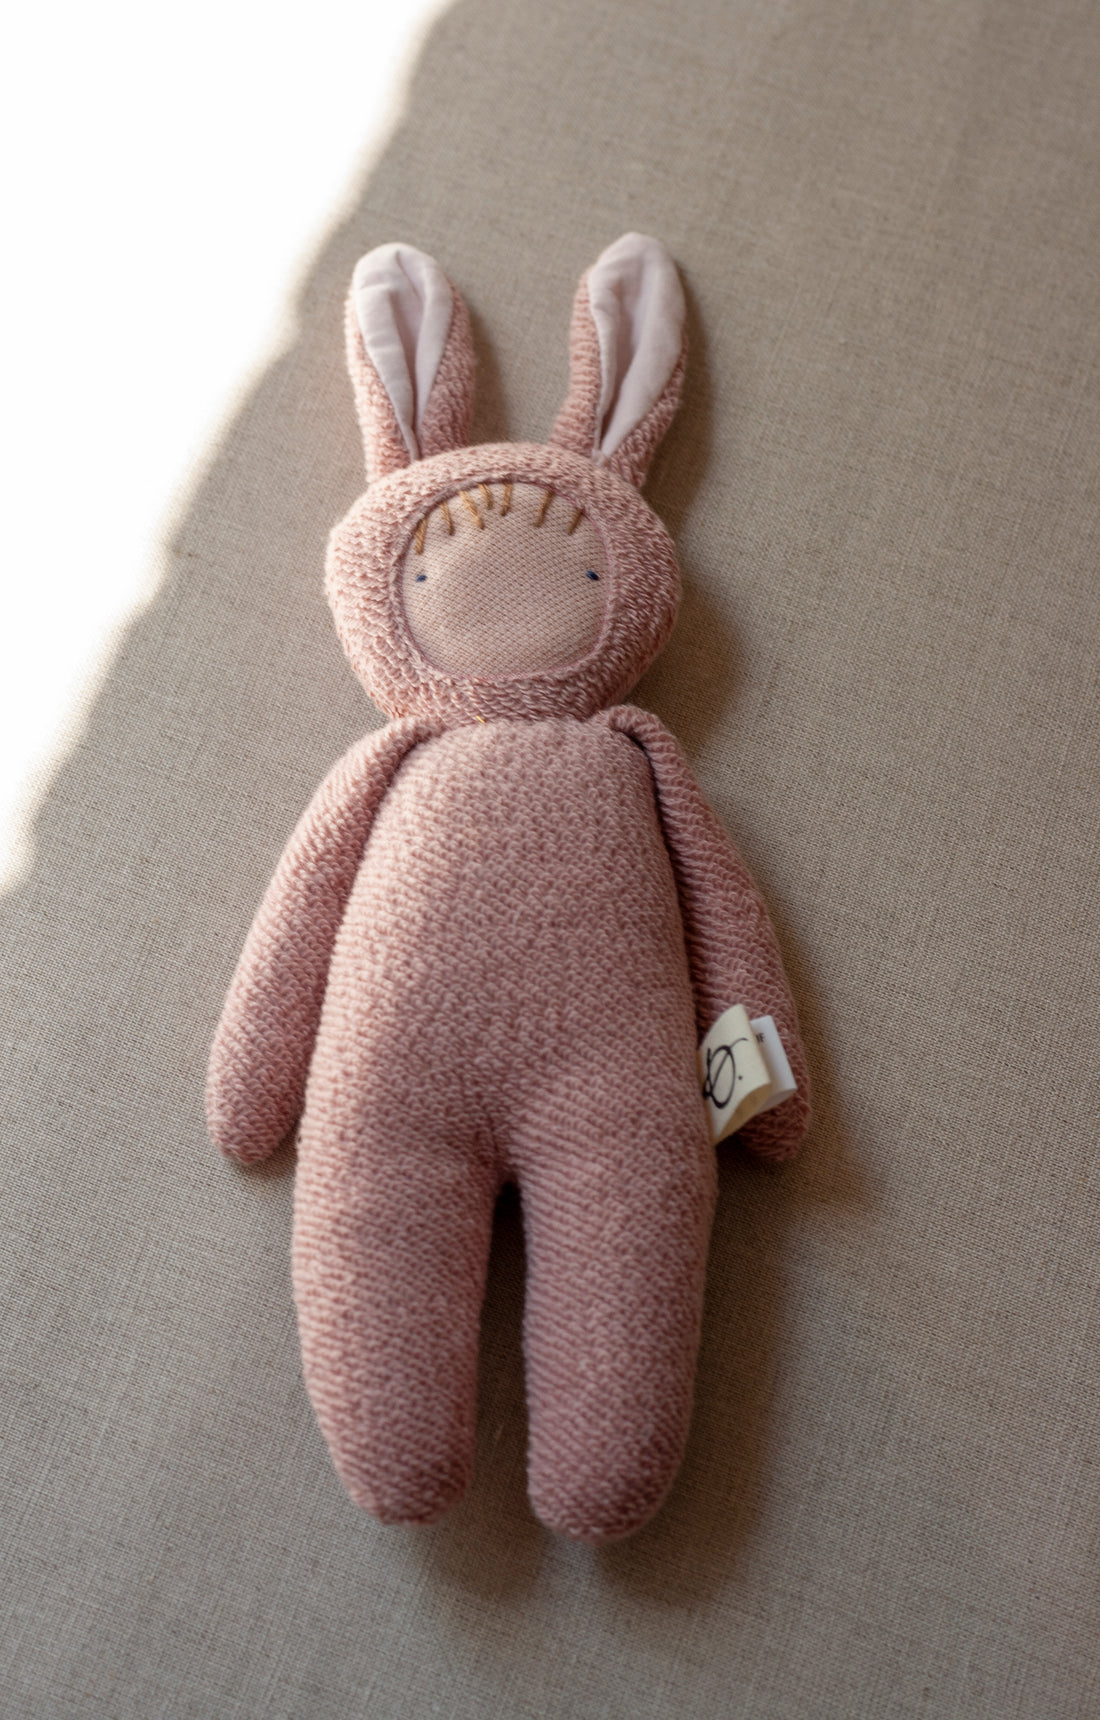 Mini doll by Ouistitine